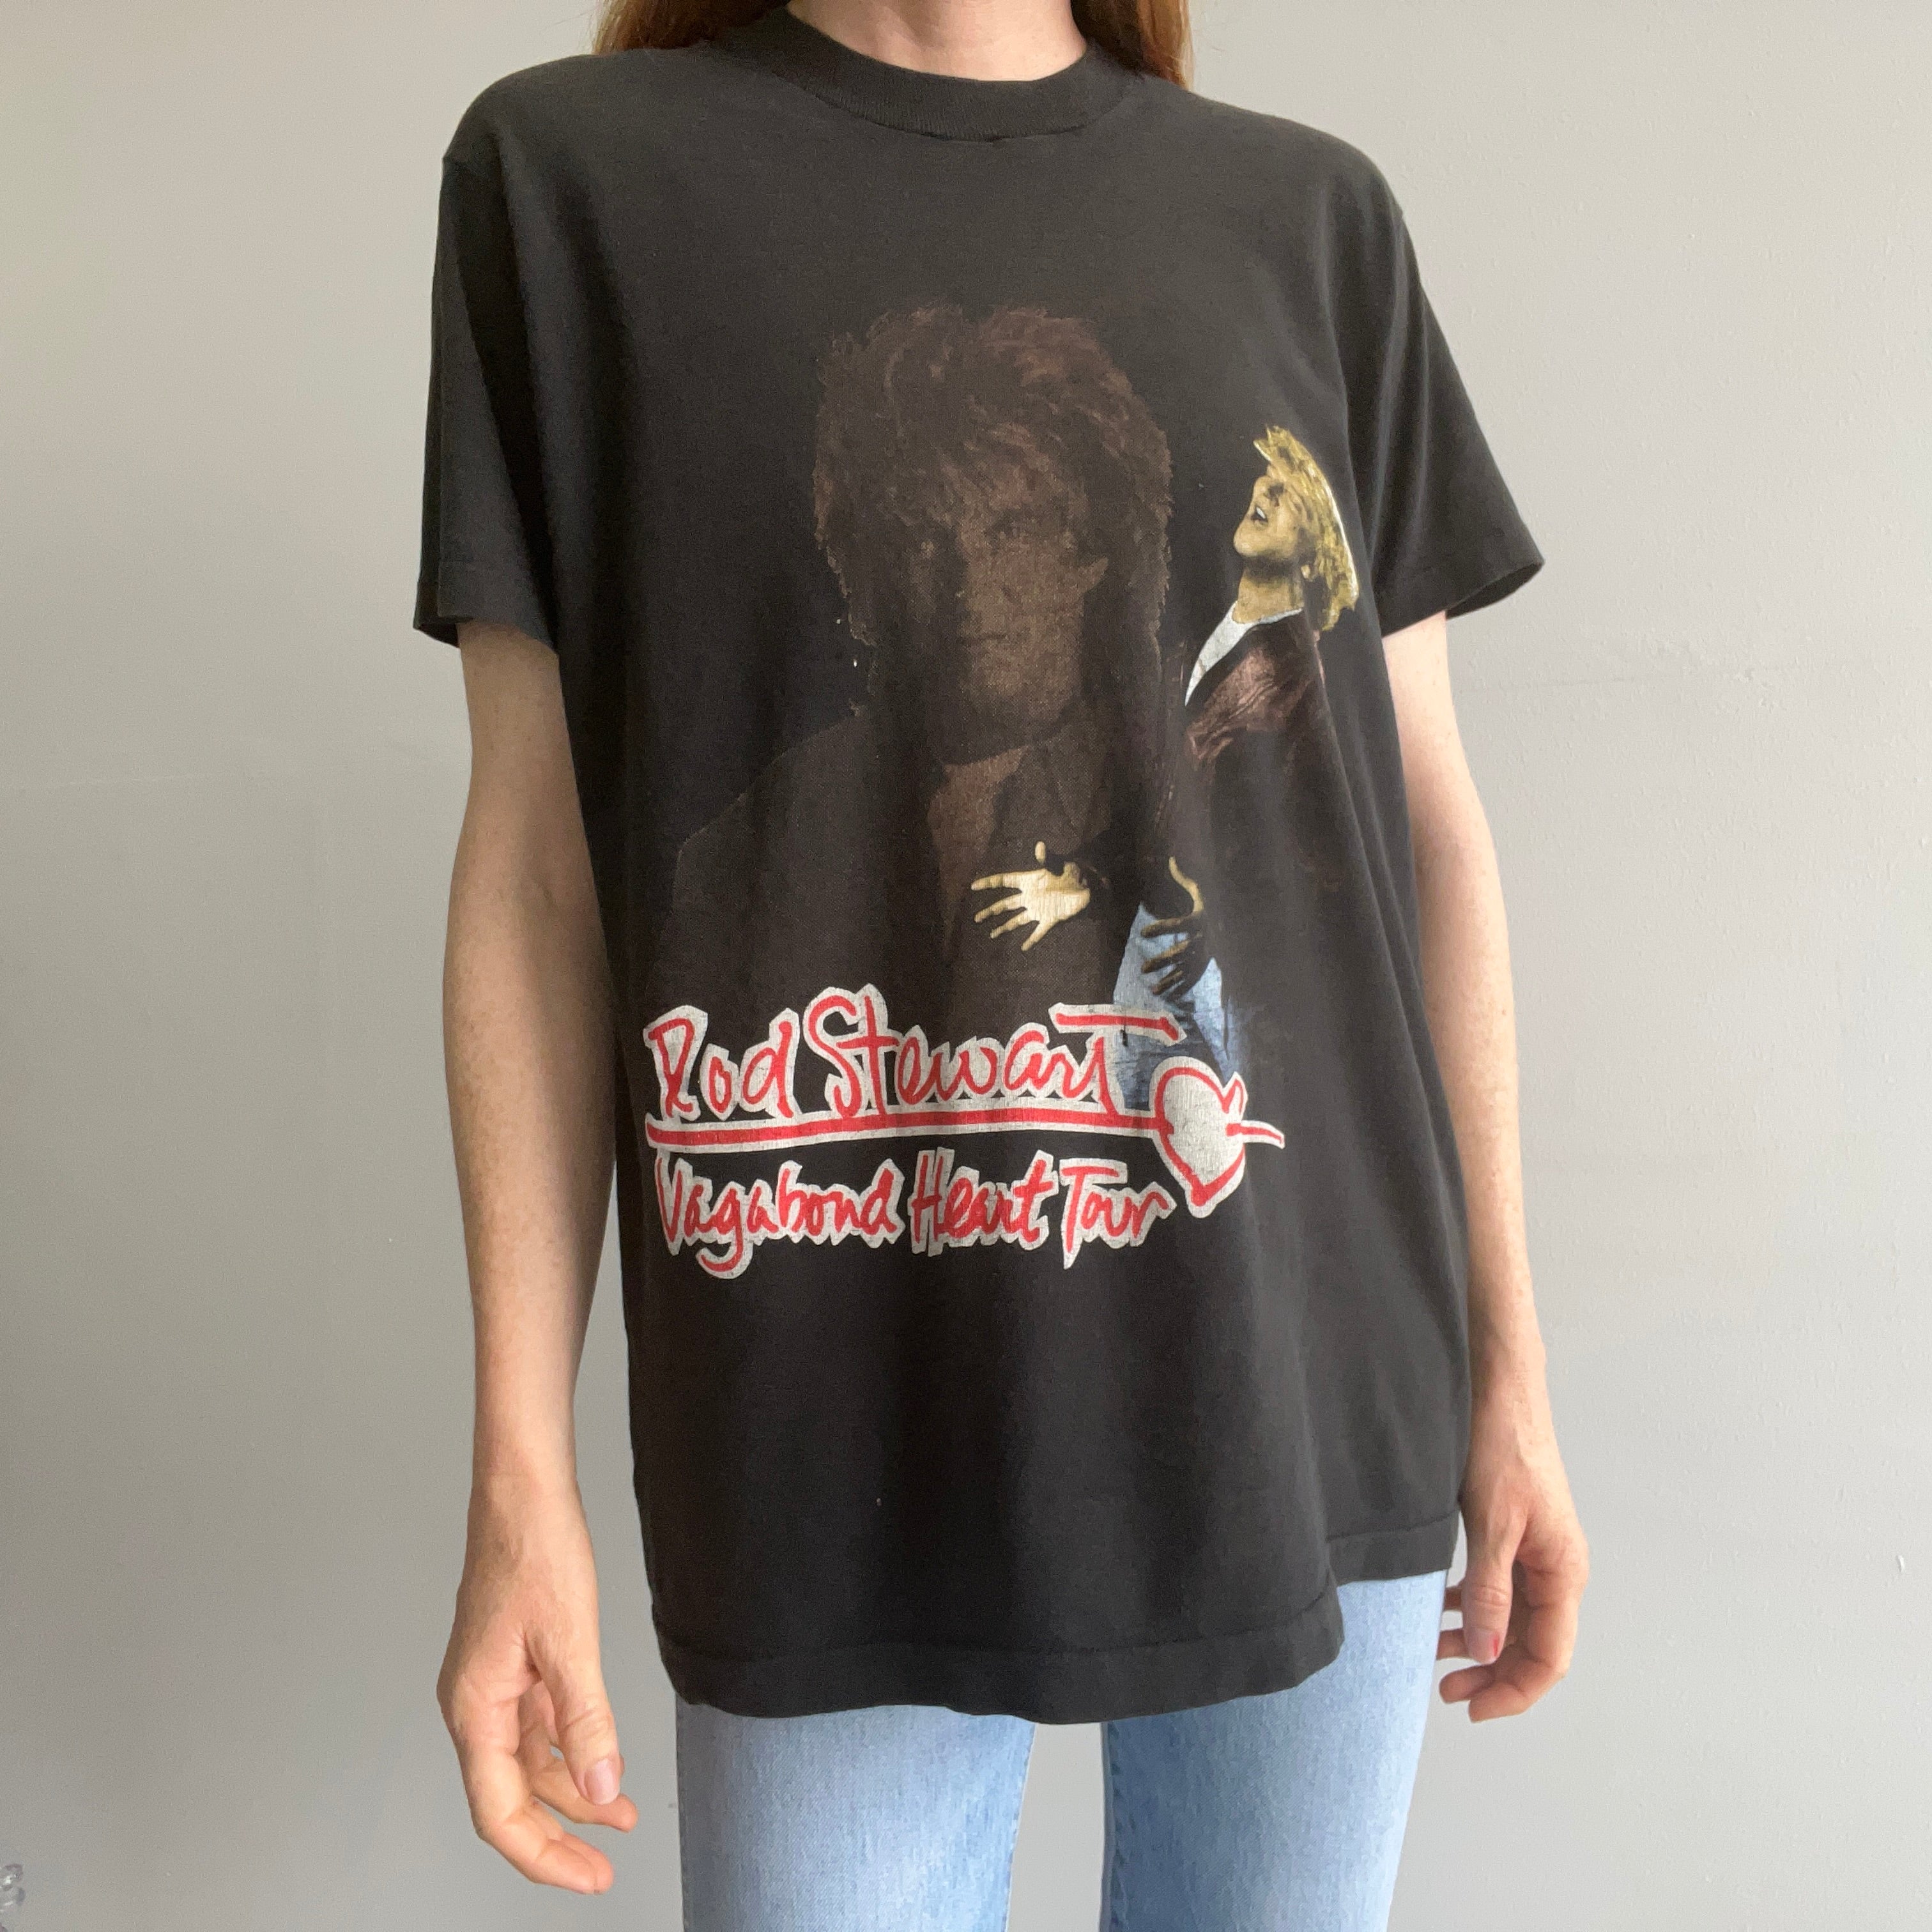 1991-92 Rod Stewart Vagabond Heart Tour Front and Back T-Shirt